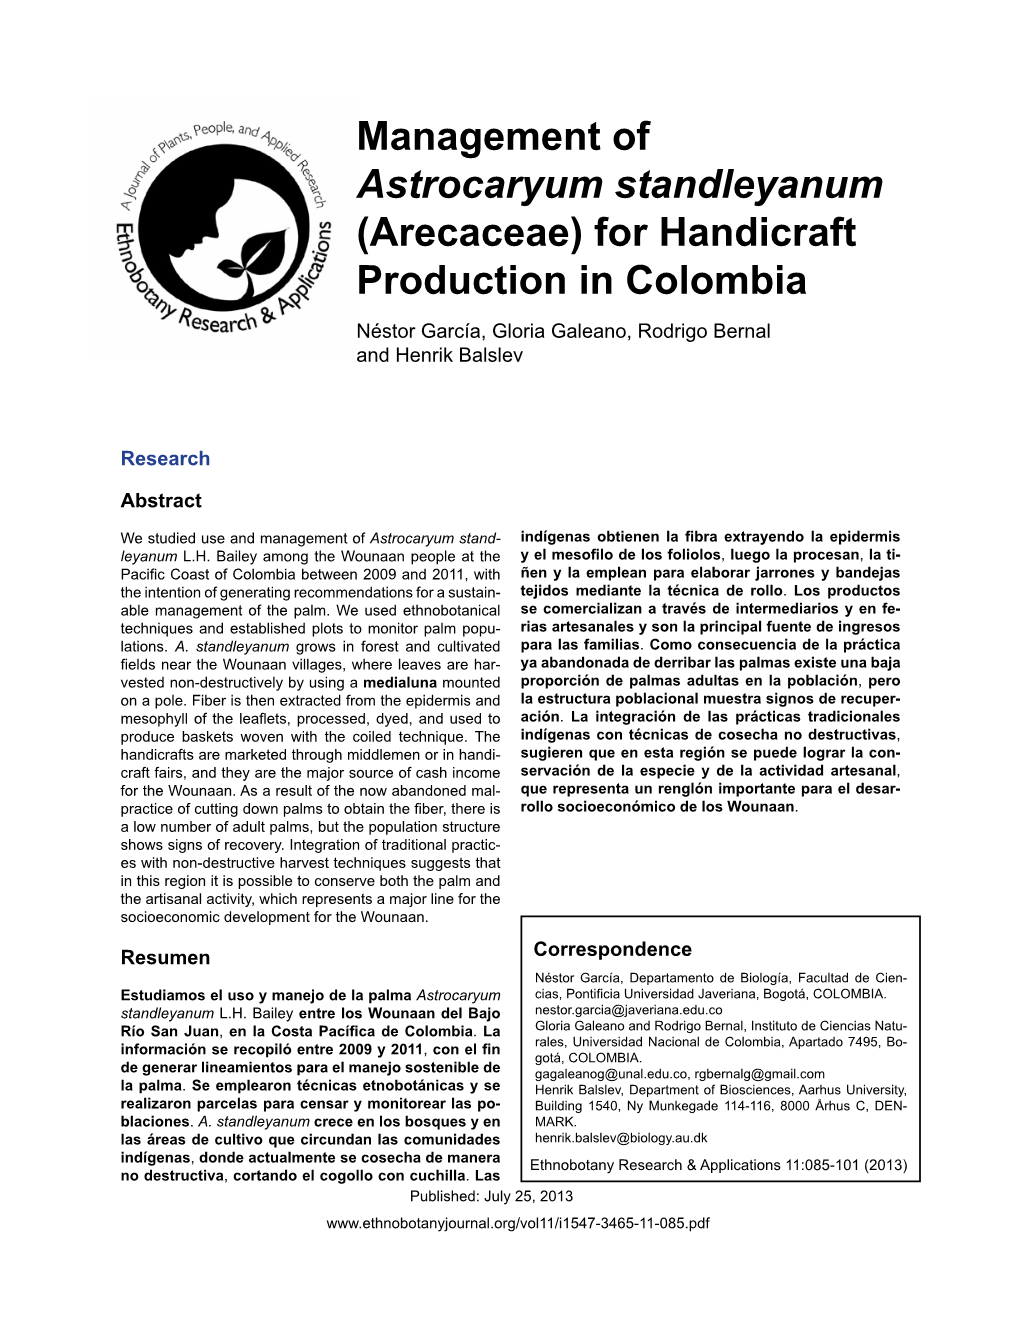 Management of Astrocaryum Standleyanum (Arecaceae) for Handicraft Production in Colombia Néstor García, Gloria Galeano, Rodrigo Bernal and Henrik Balslev